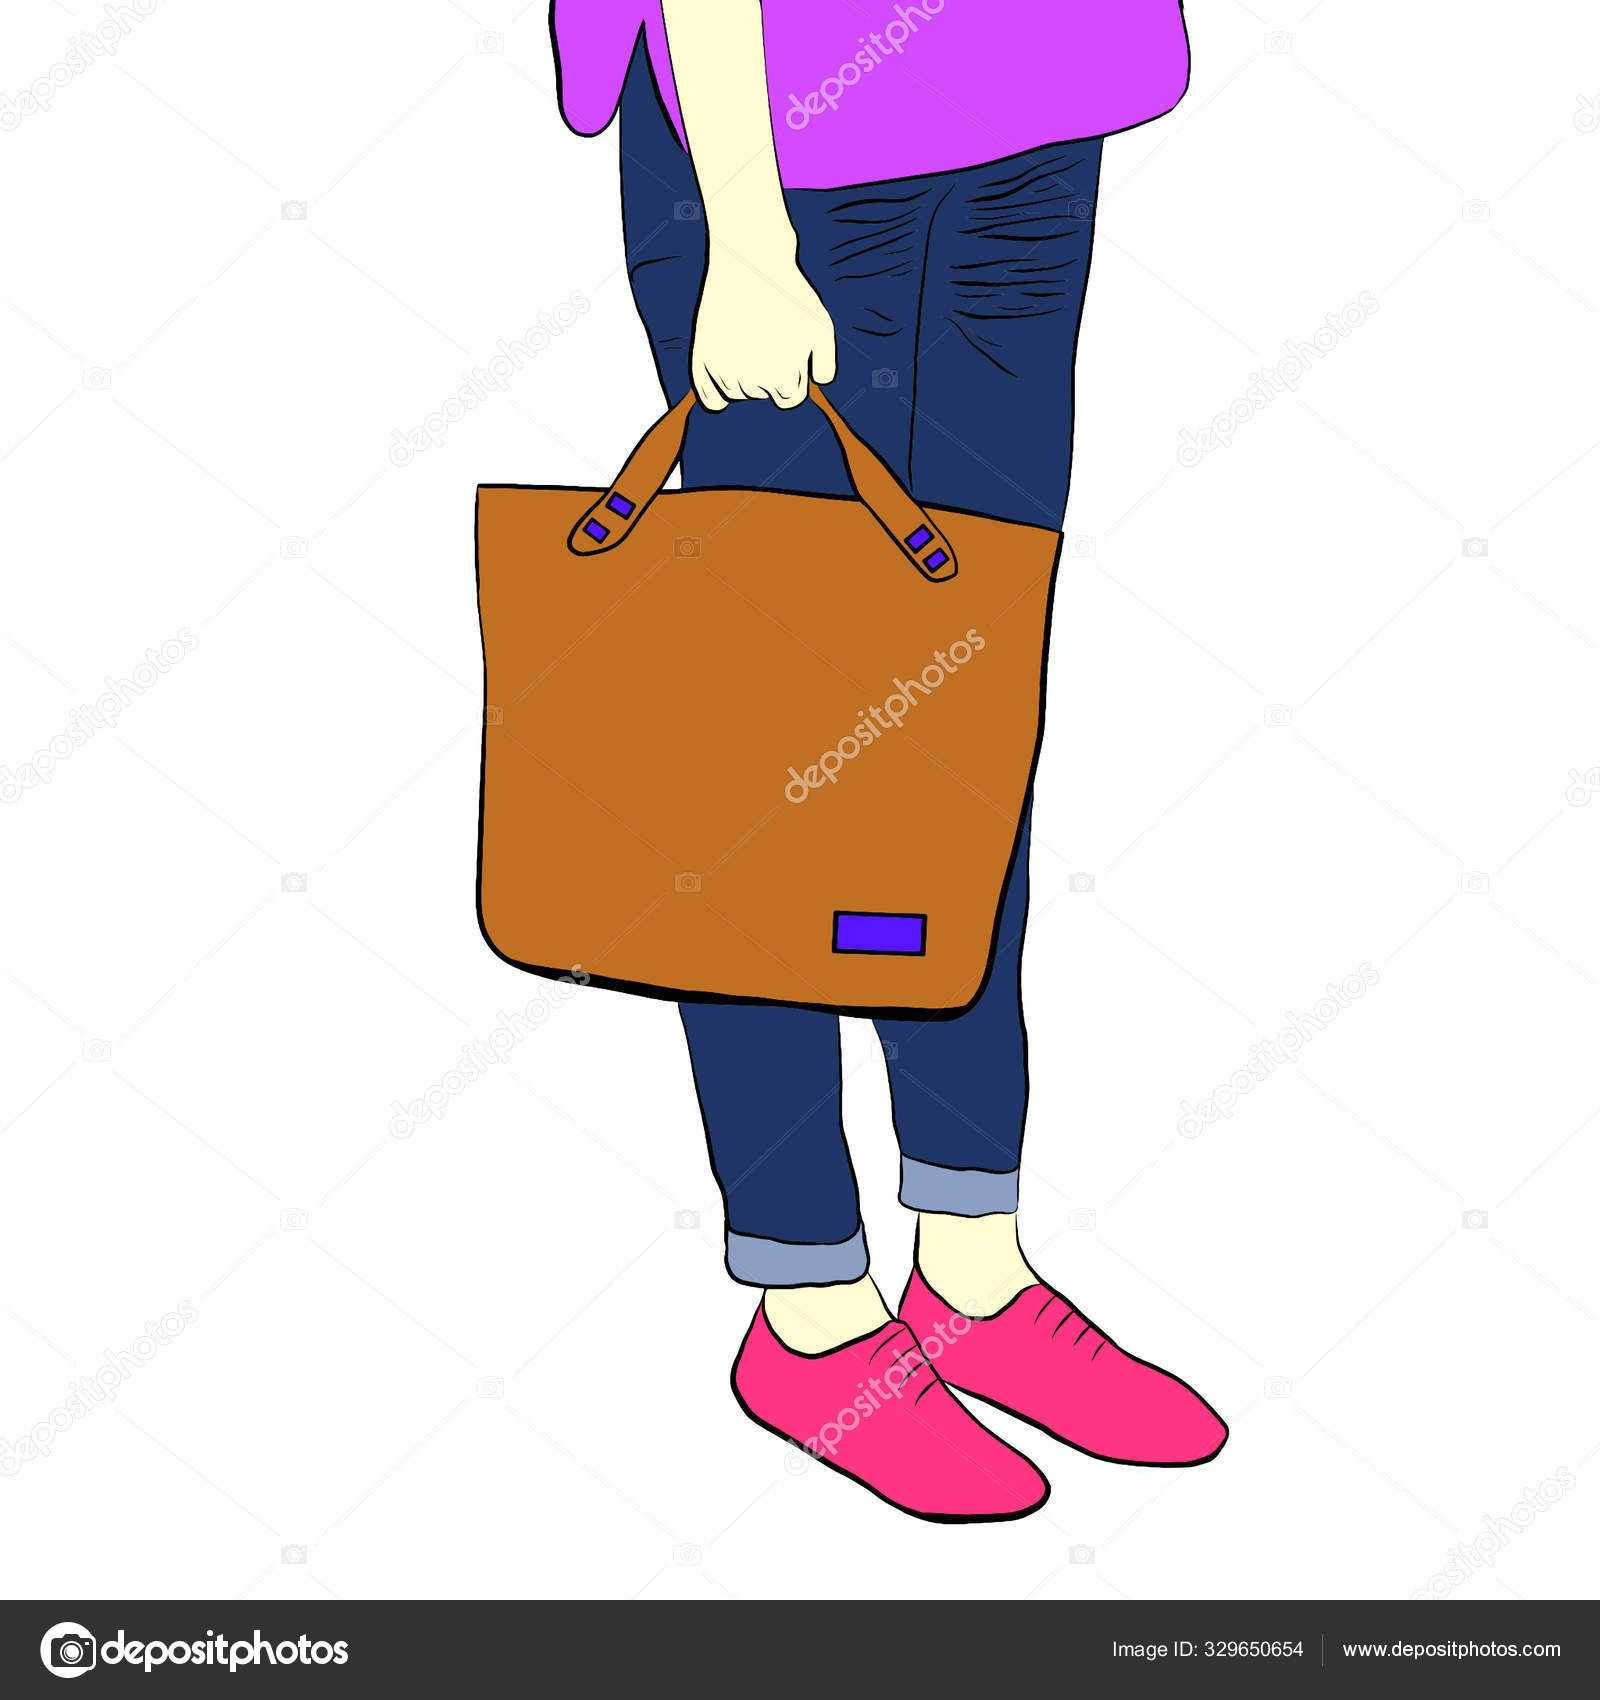 Buy Rehan Enterprises Cartoon Kids School Backpack Cartoon Character Bags  best for Boys and Girls (Pink) at Amazon.in